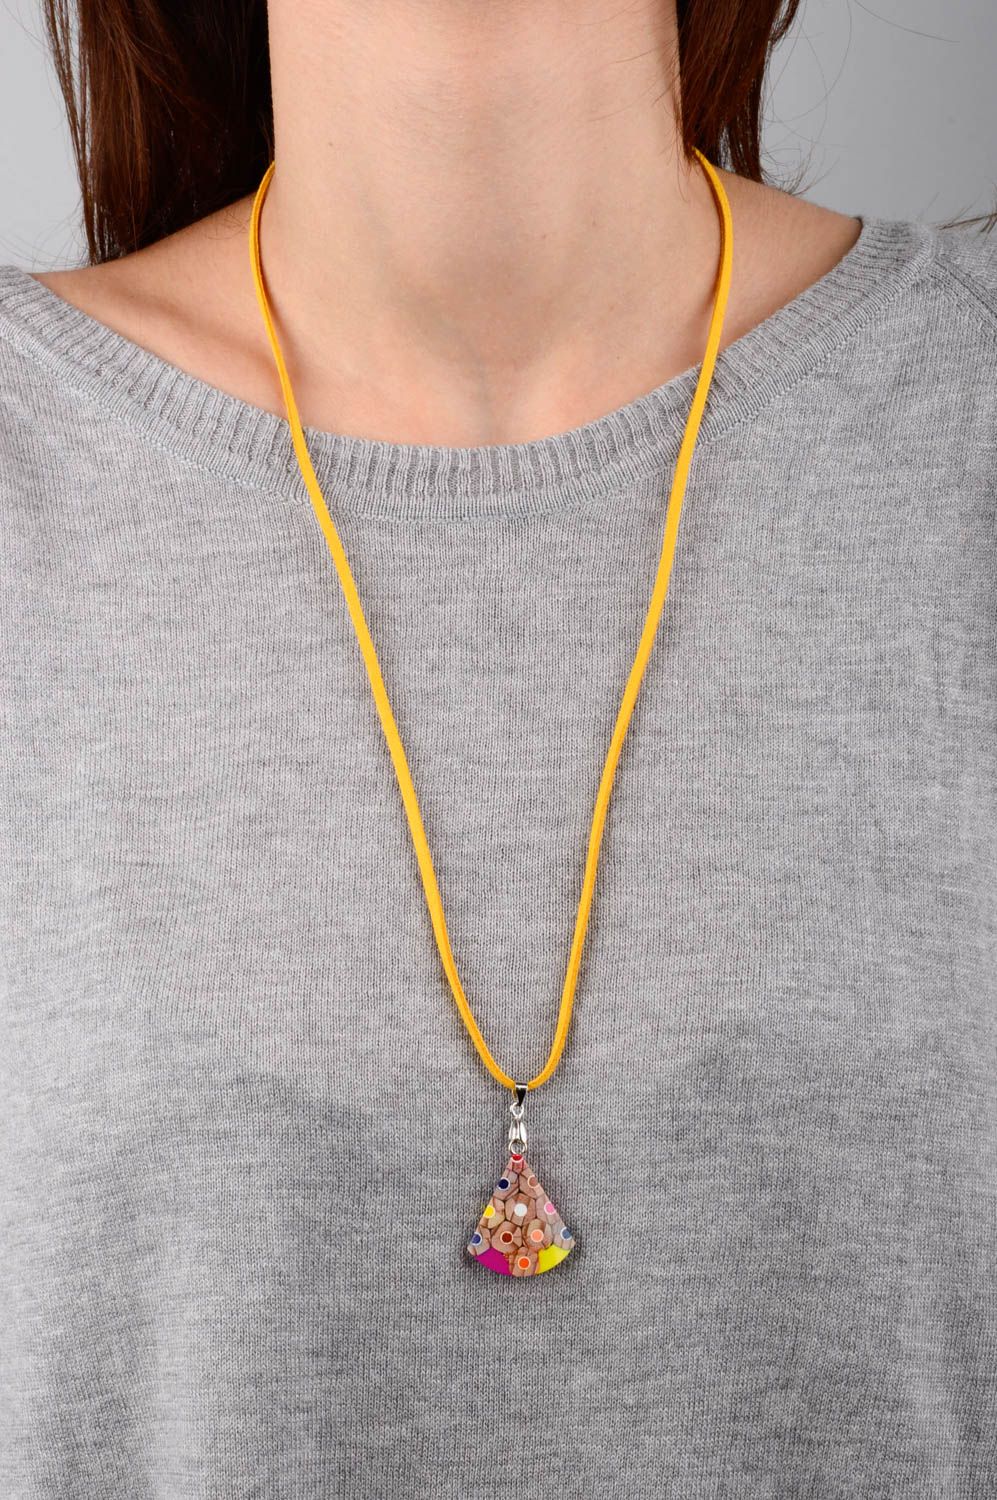 Handmade pendant necklace unique jewelry fashion accessories for women photo 2